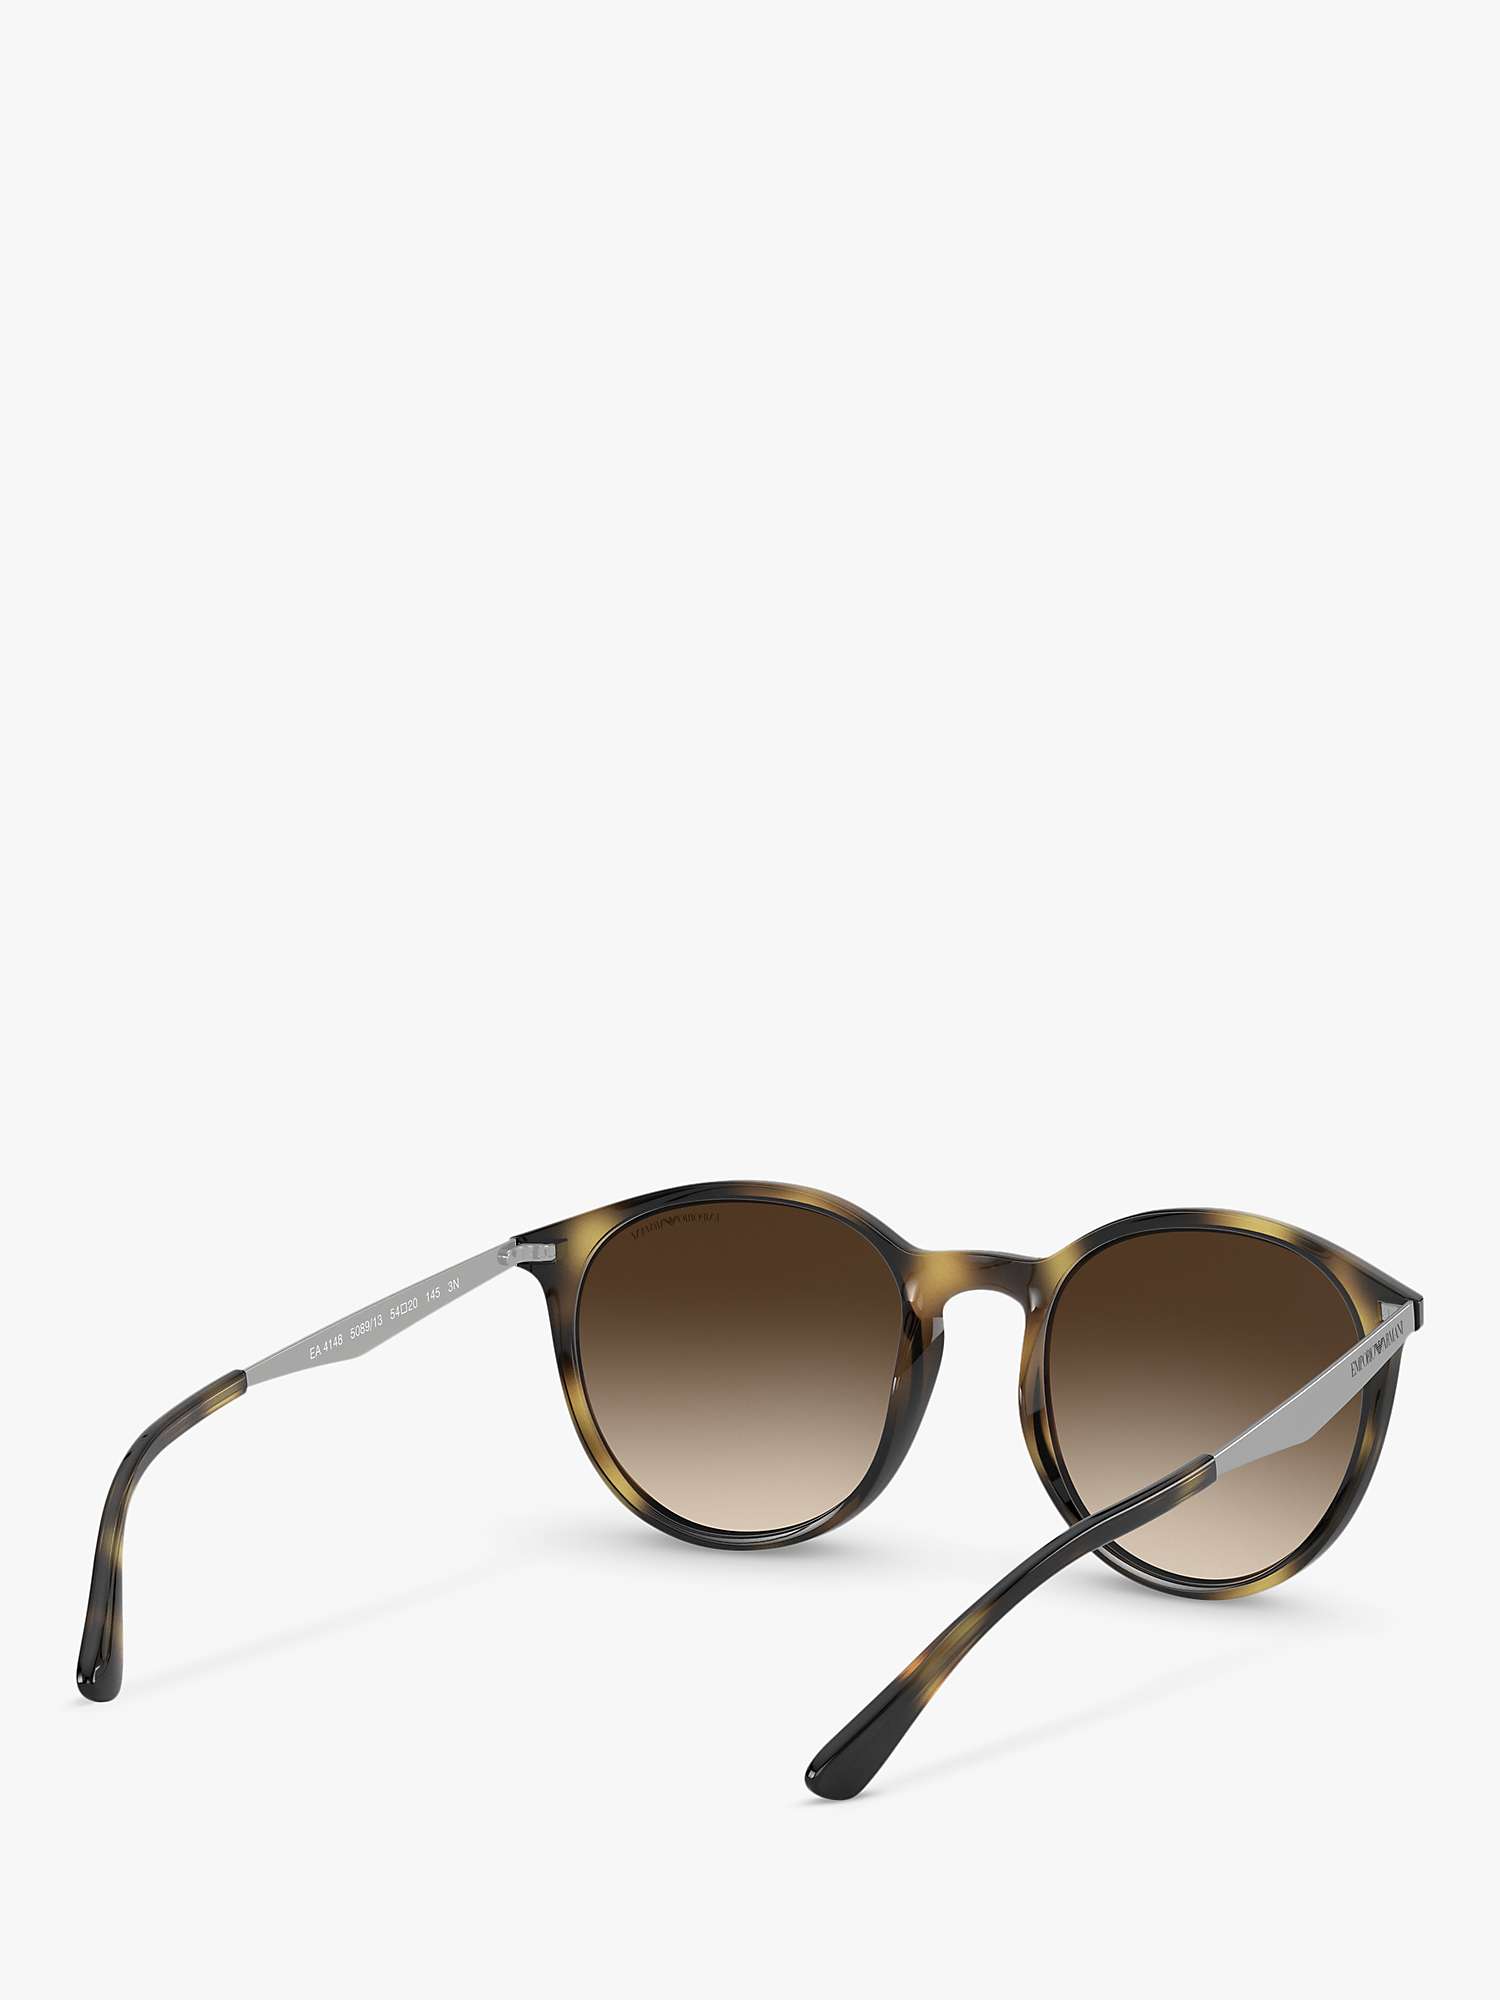 Buy Emporio Armani EA4148 Women's Phantos Sunglasses Online at johnlewis.com